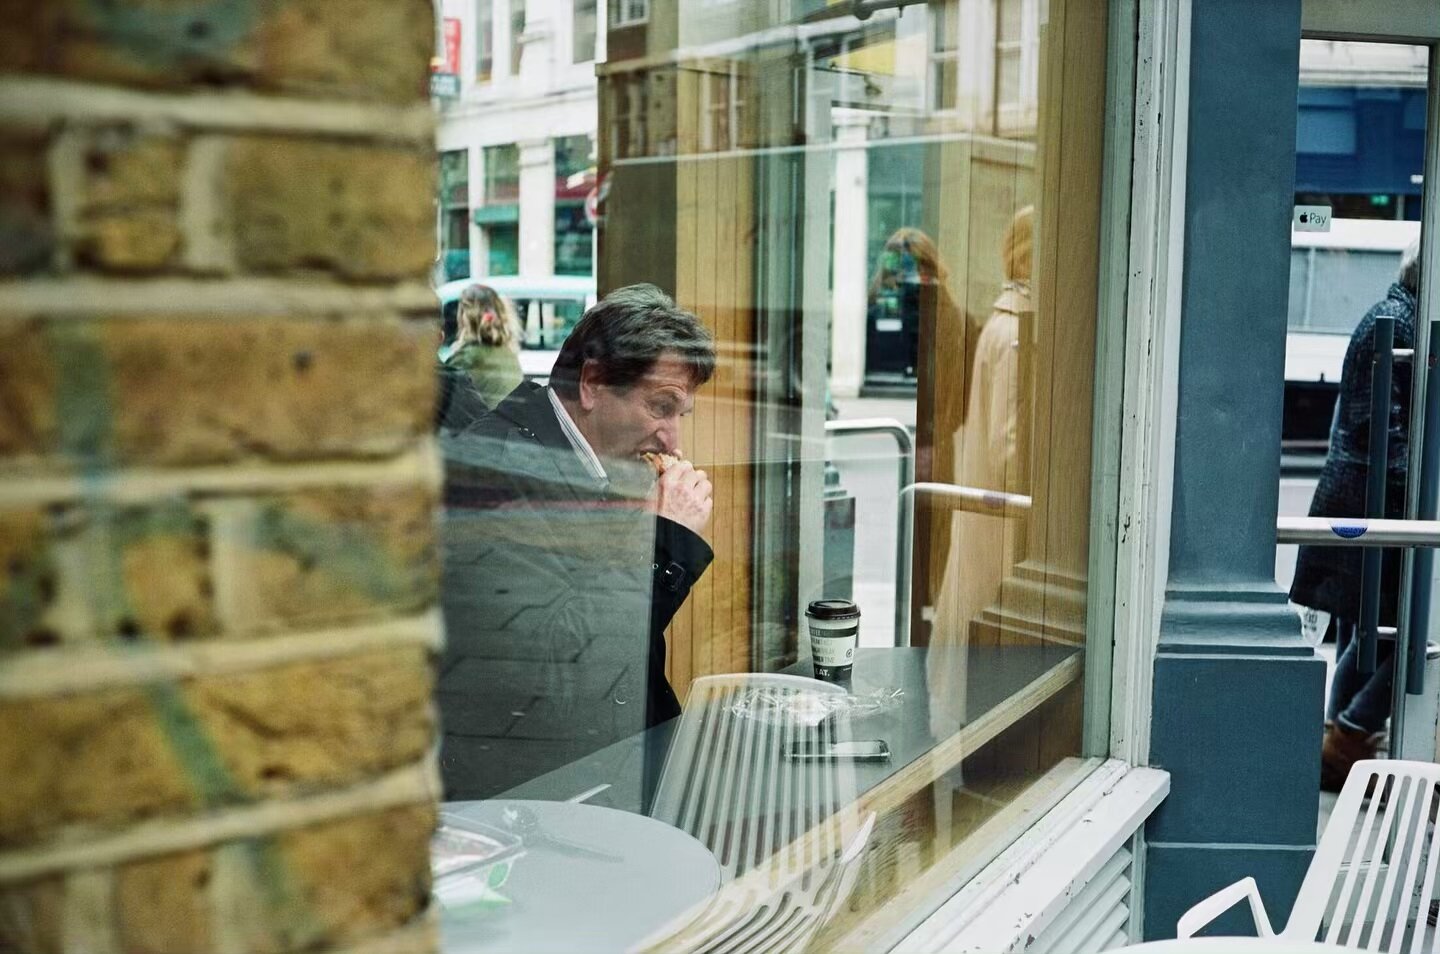 &lsquo;break&rsquo; [1] great eastern street, london.⠀⠀⠀⠀⠀⠀⠀⠀⠀⠀⠀⠀⠀⠀⠀⠀⠀⠀⠀ ⠀⠀⠀⠀⠀⠀⠀⠀⠀⠀⠀⠀⠀⠀⠀⠀
_________________
⠀⠀⠀⠀⠀⠀⠀⠀⠀
#vsco #vscocam #35mm #street #london #fujiframez #lightandshadow #cinematography #portra #portra400 #film #streetlight #streetphotog